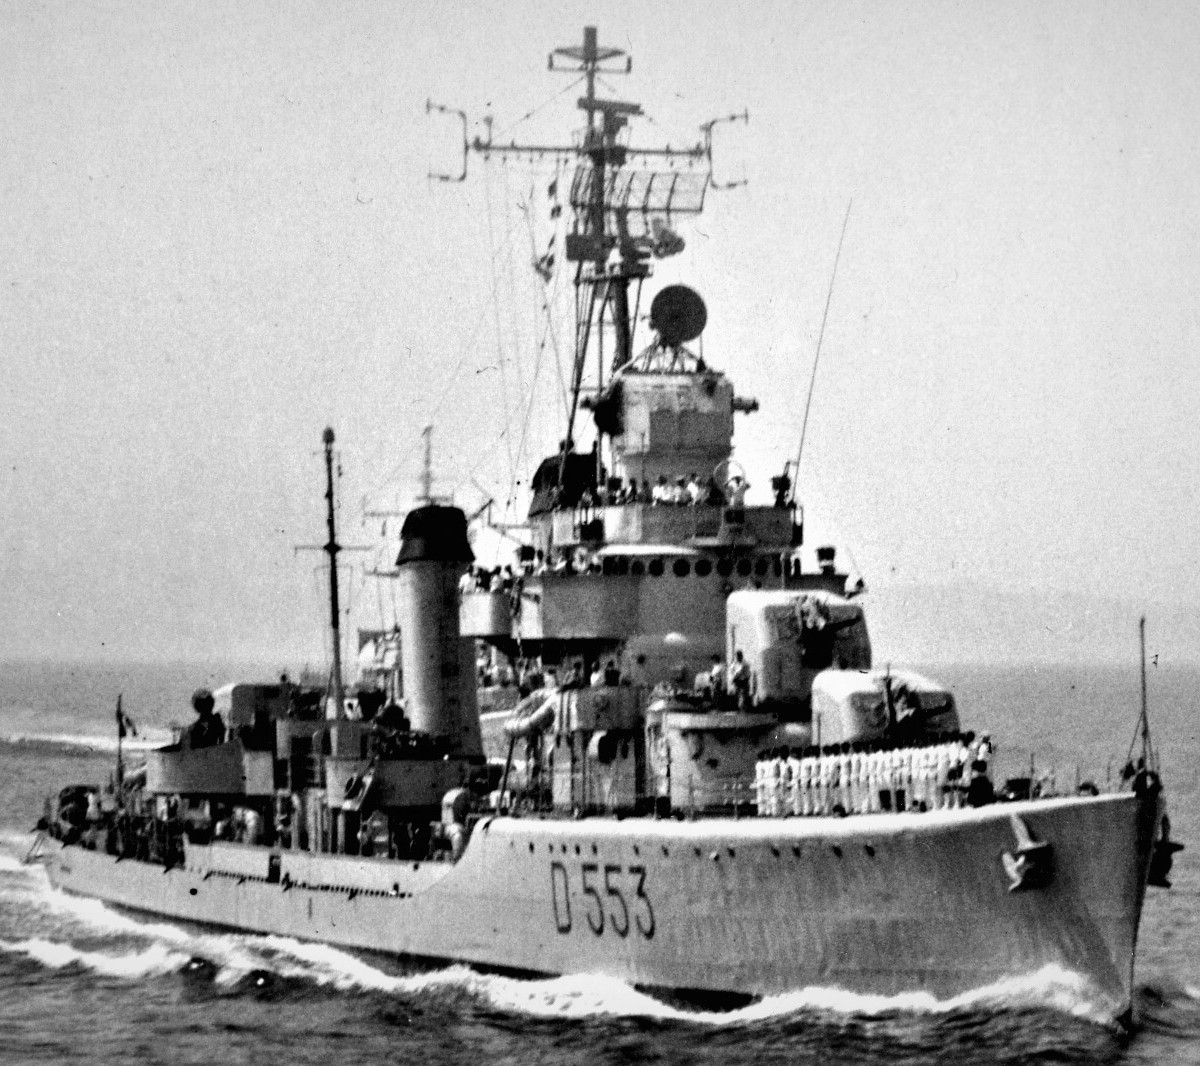 d-553 artigliere nave its destroyer italian navy marina militare 03